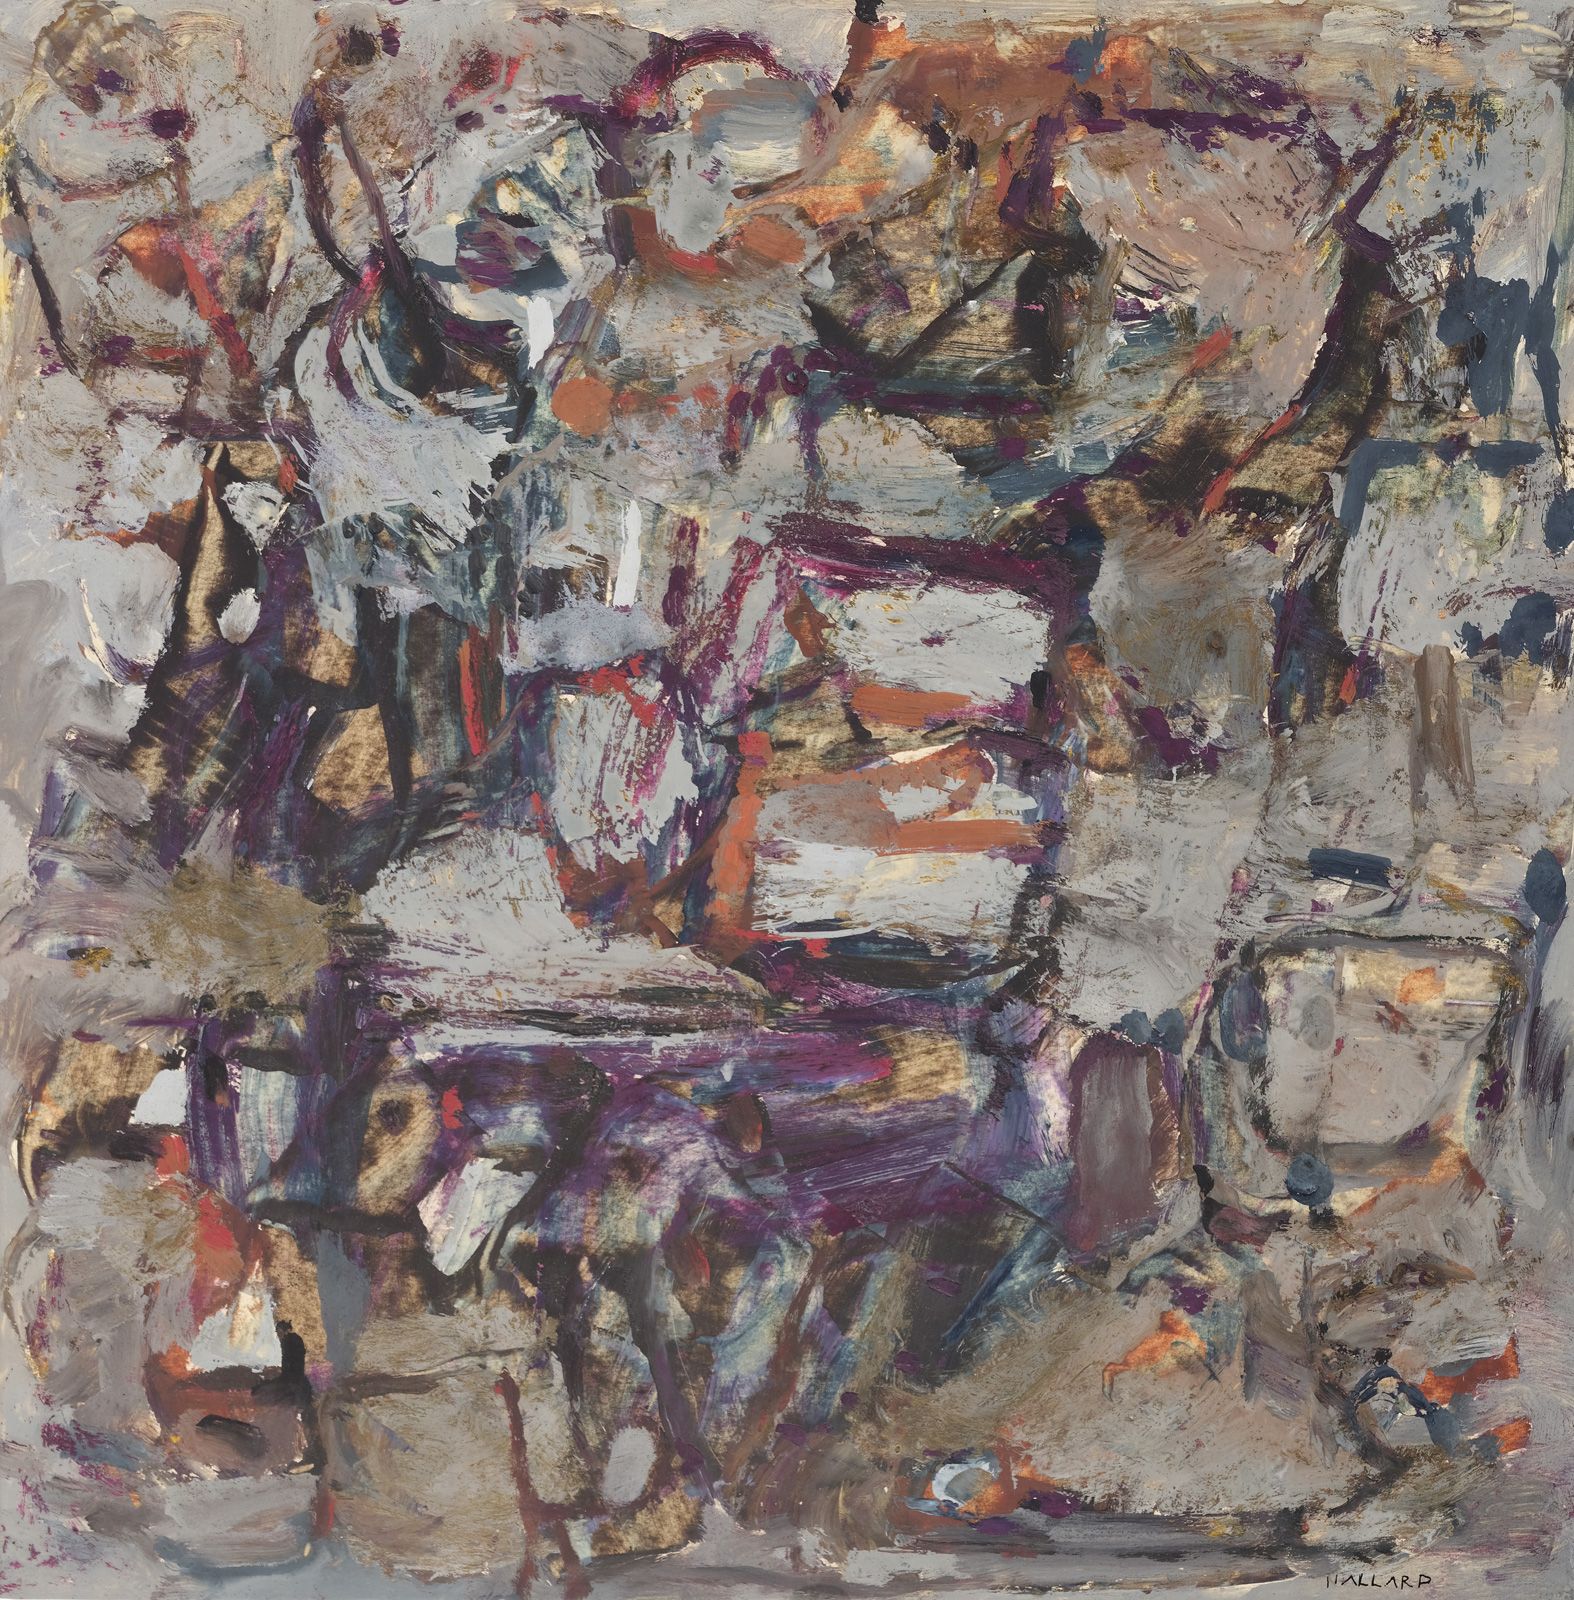 Null 路易斯-纳拉尔(1918-2016)

无题

纸上油画，右下方有签名。

35.5 x 35.5厘米